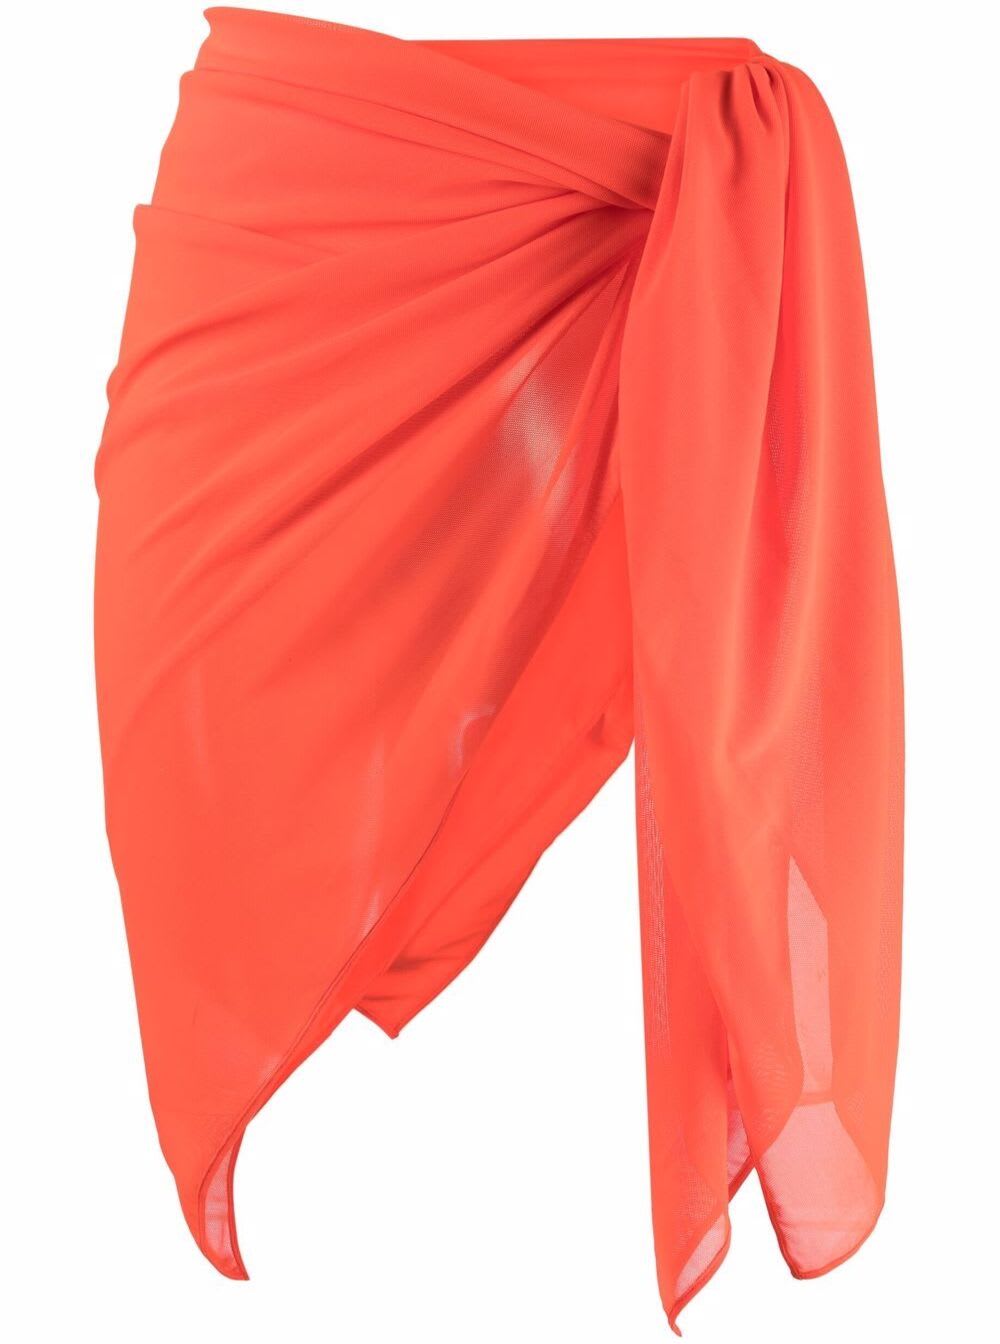 Fisico - Cristina Ferrari Fisico Womans Orange Stretch Voile Pareo With Knotted Detail